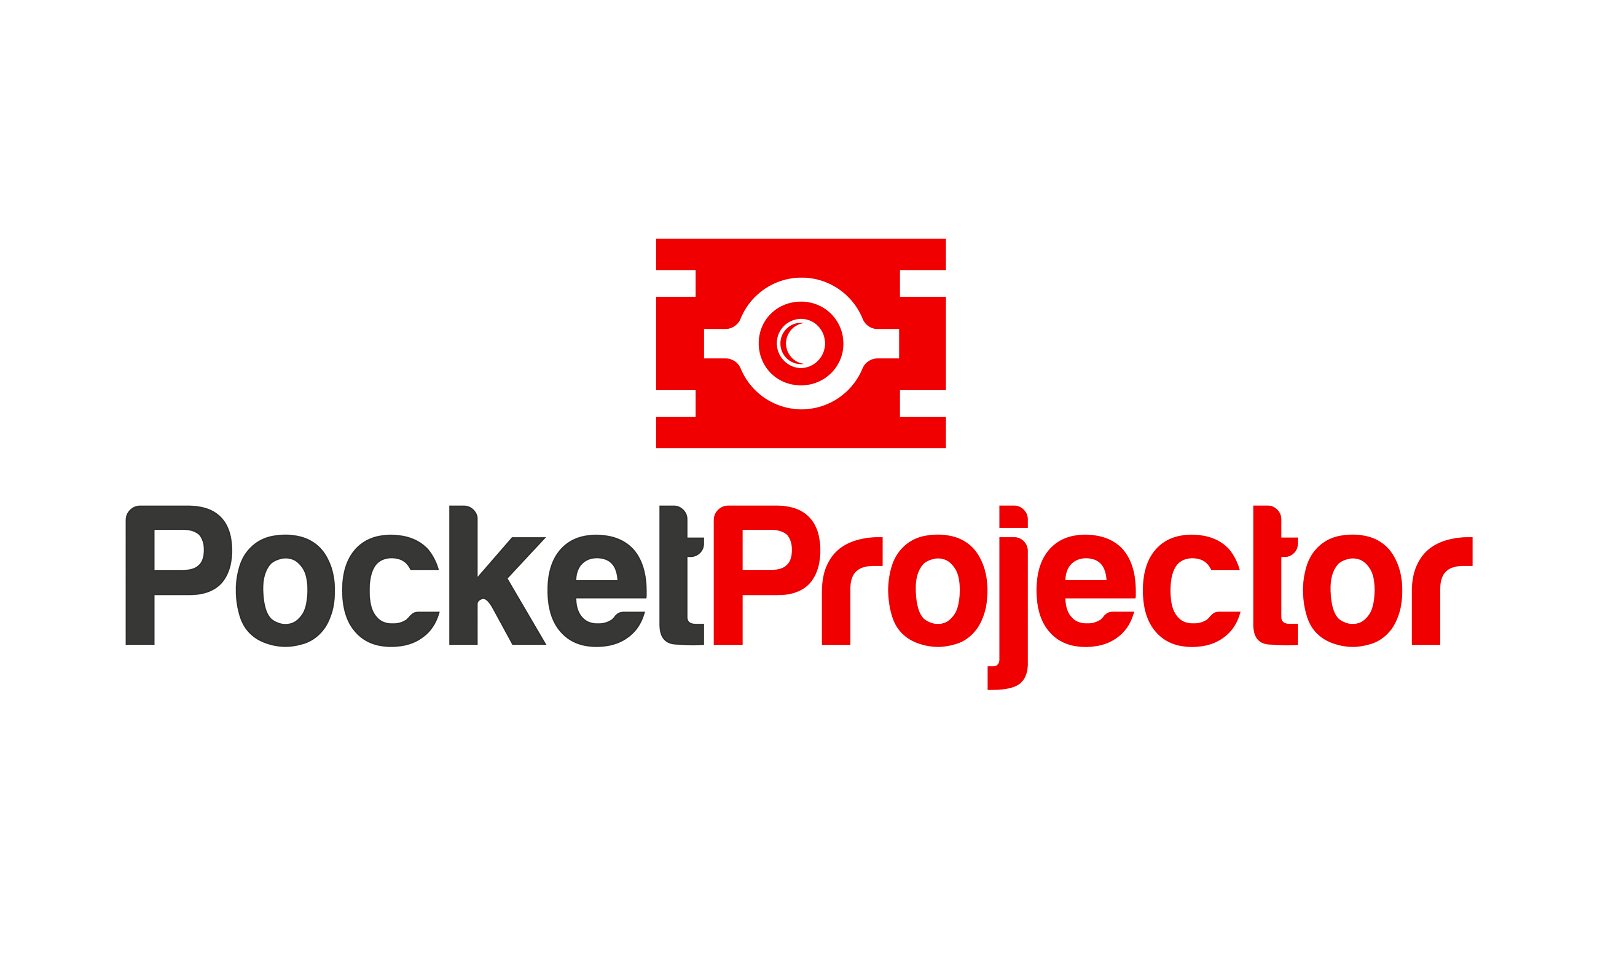 PocketProjector.com - Creative brandable domain for sale